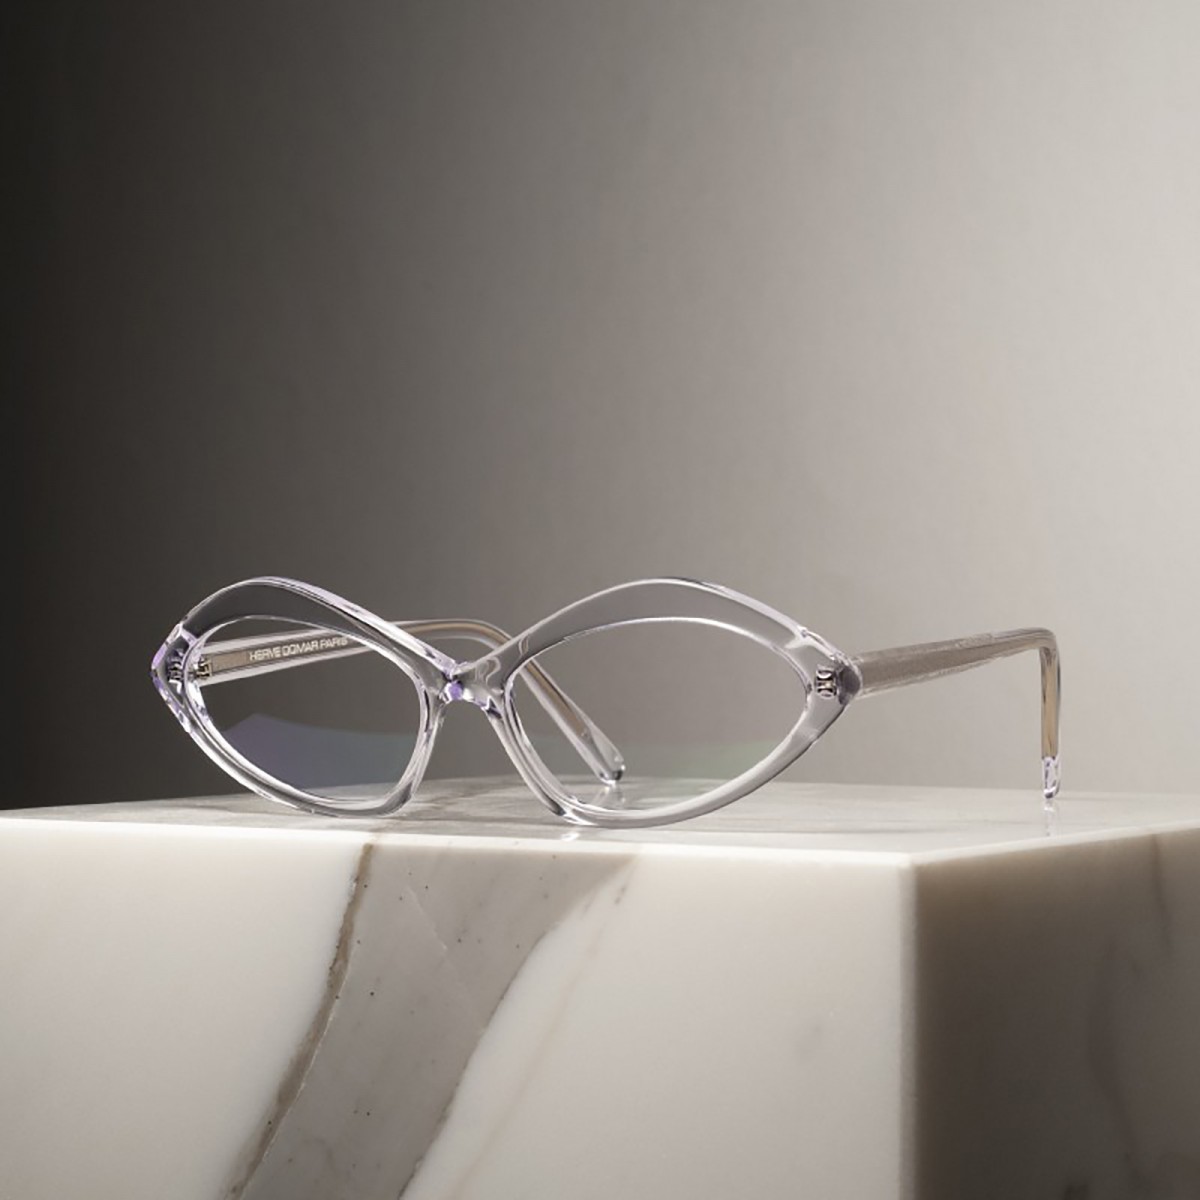 0043 - Glasses in acetate handmade in France